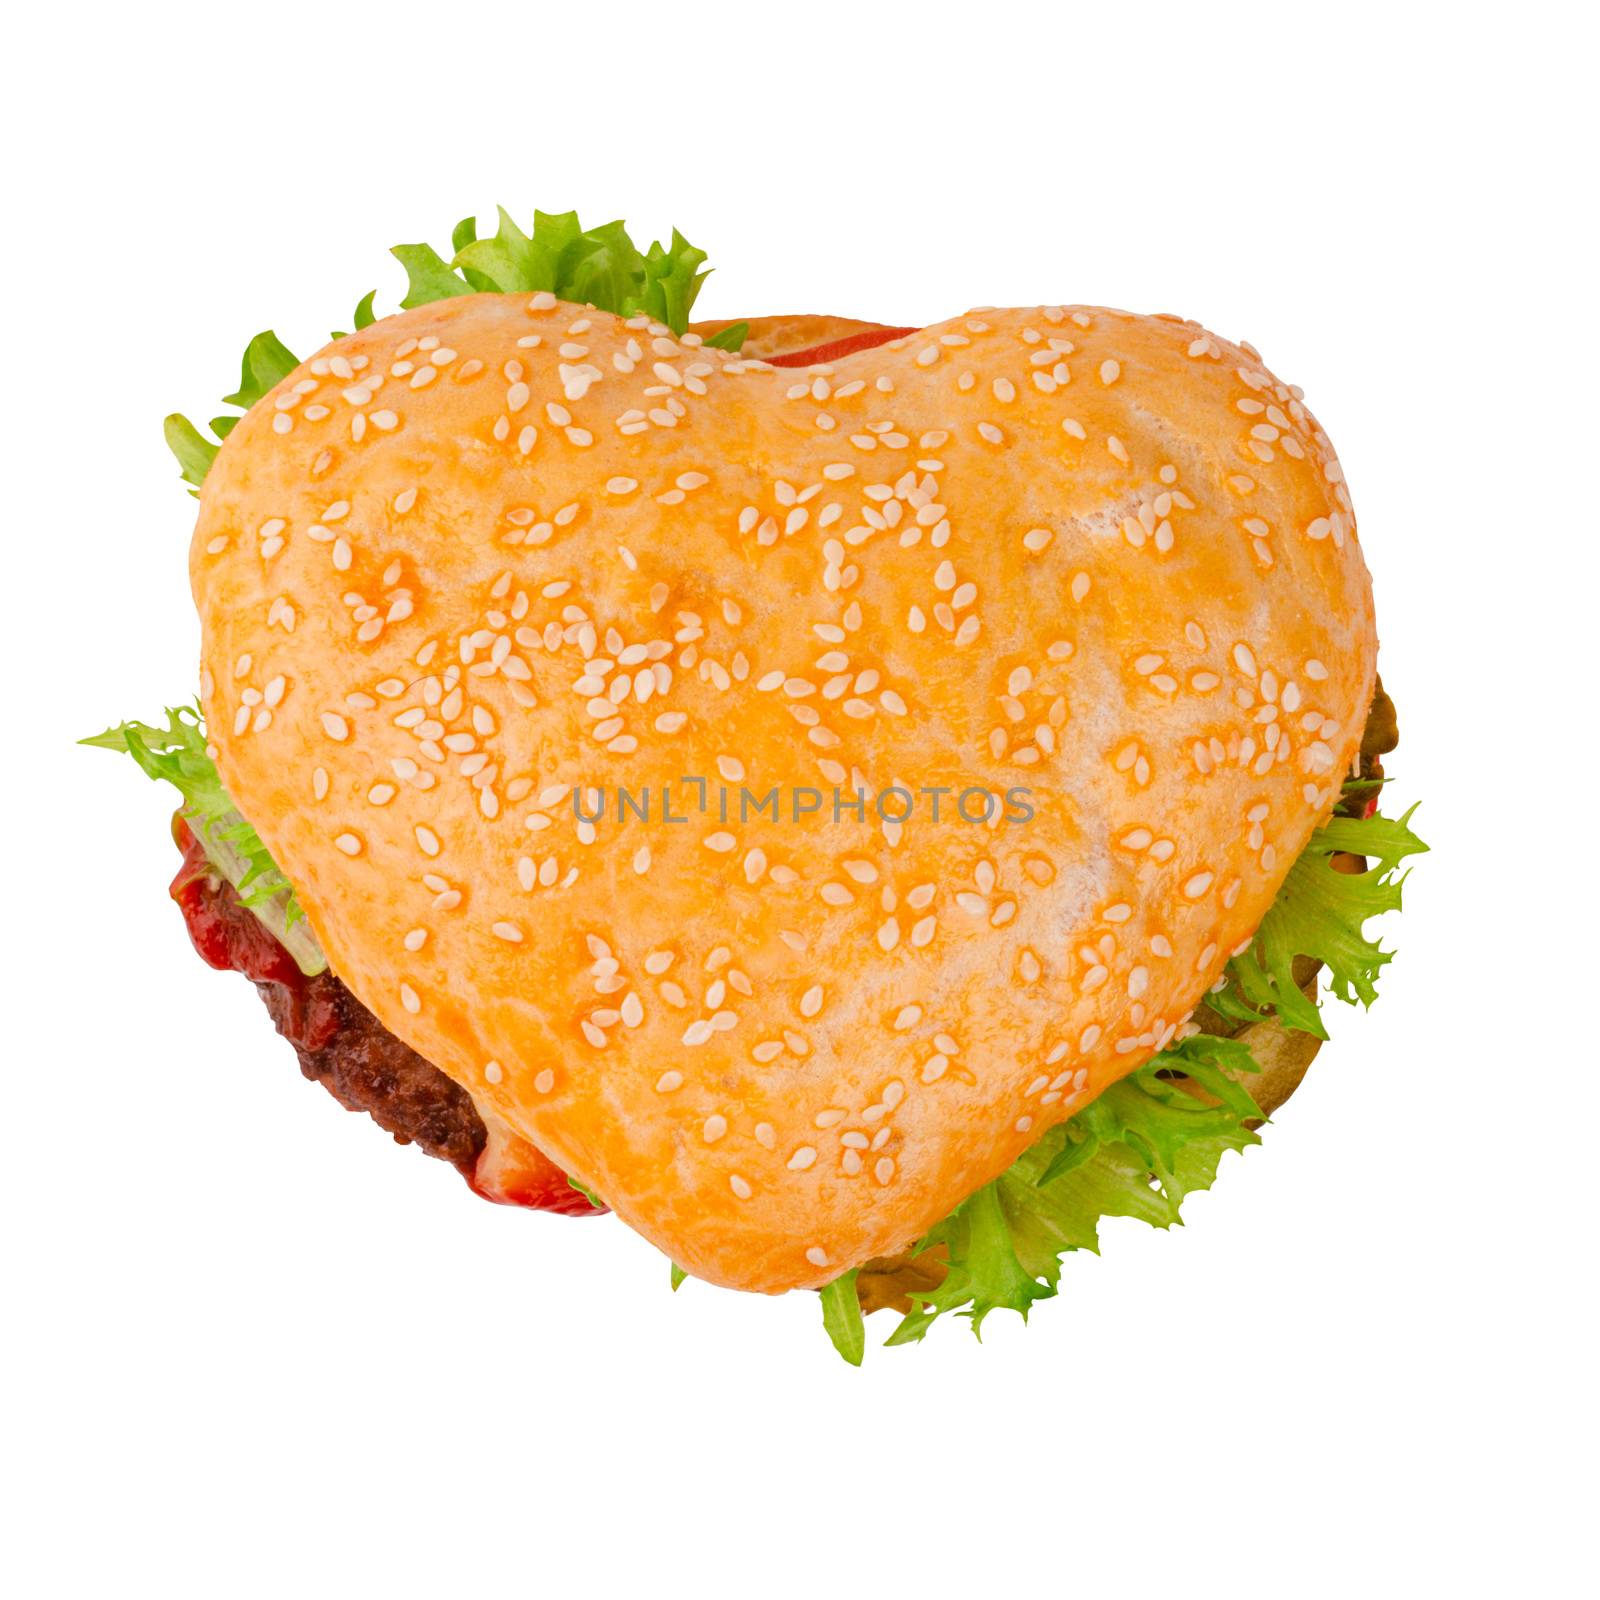 Heart shape hamburger on white by destillat